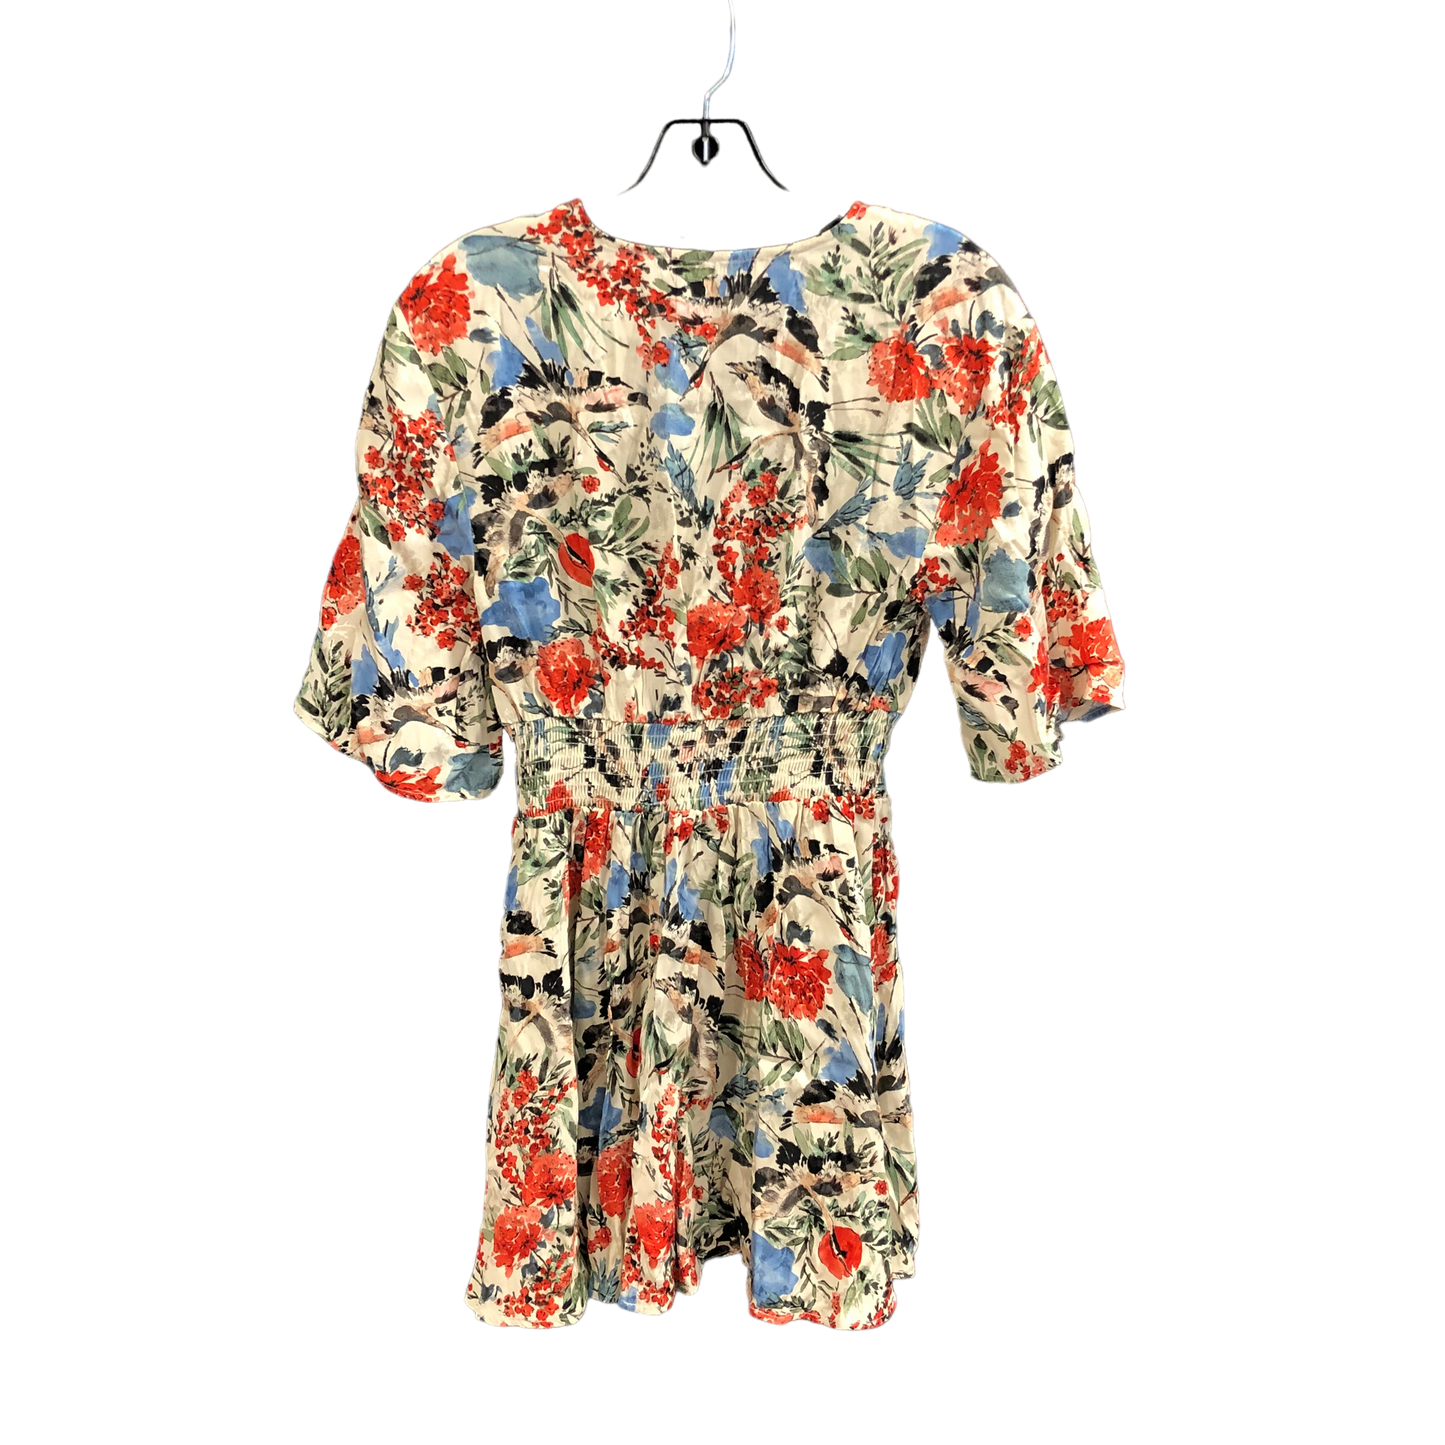 Floral Print Top Short Sleeve Zara Basic, Size S